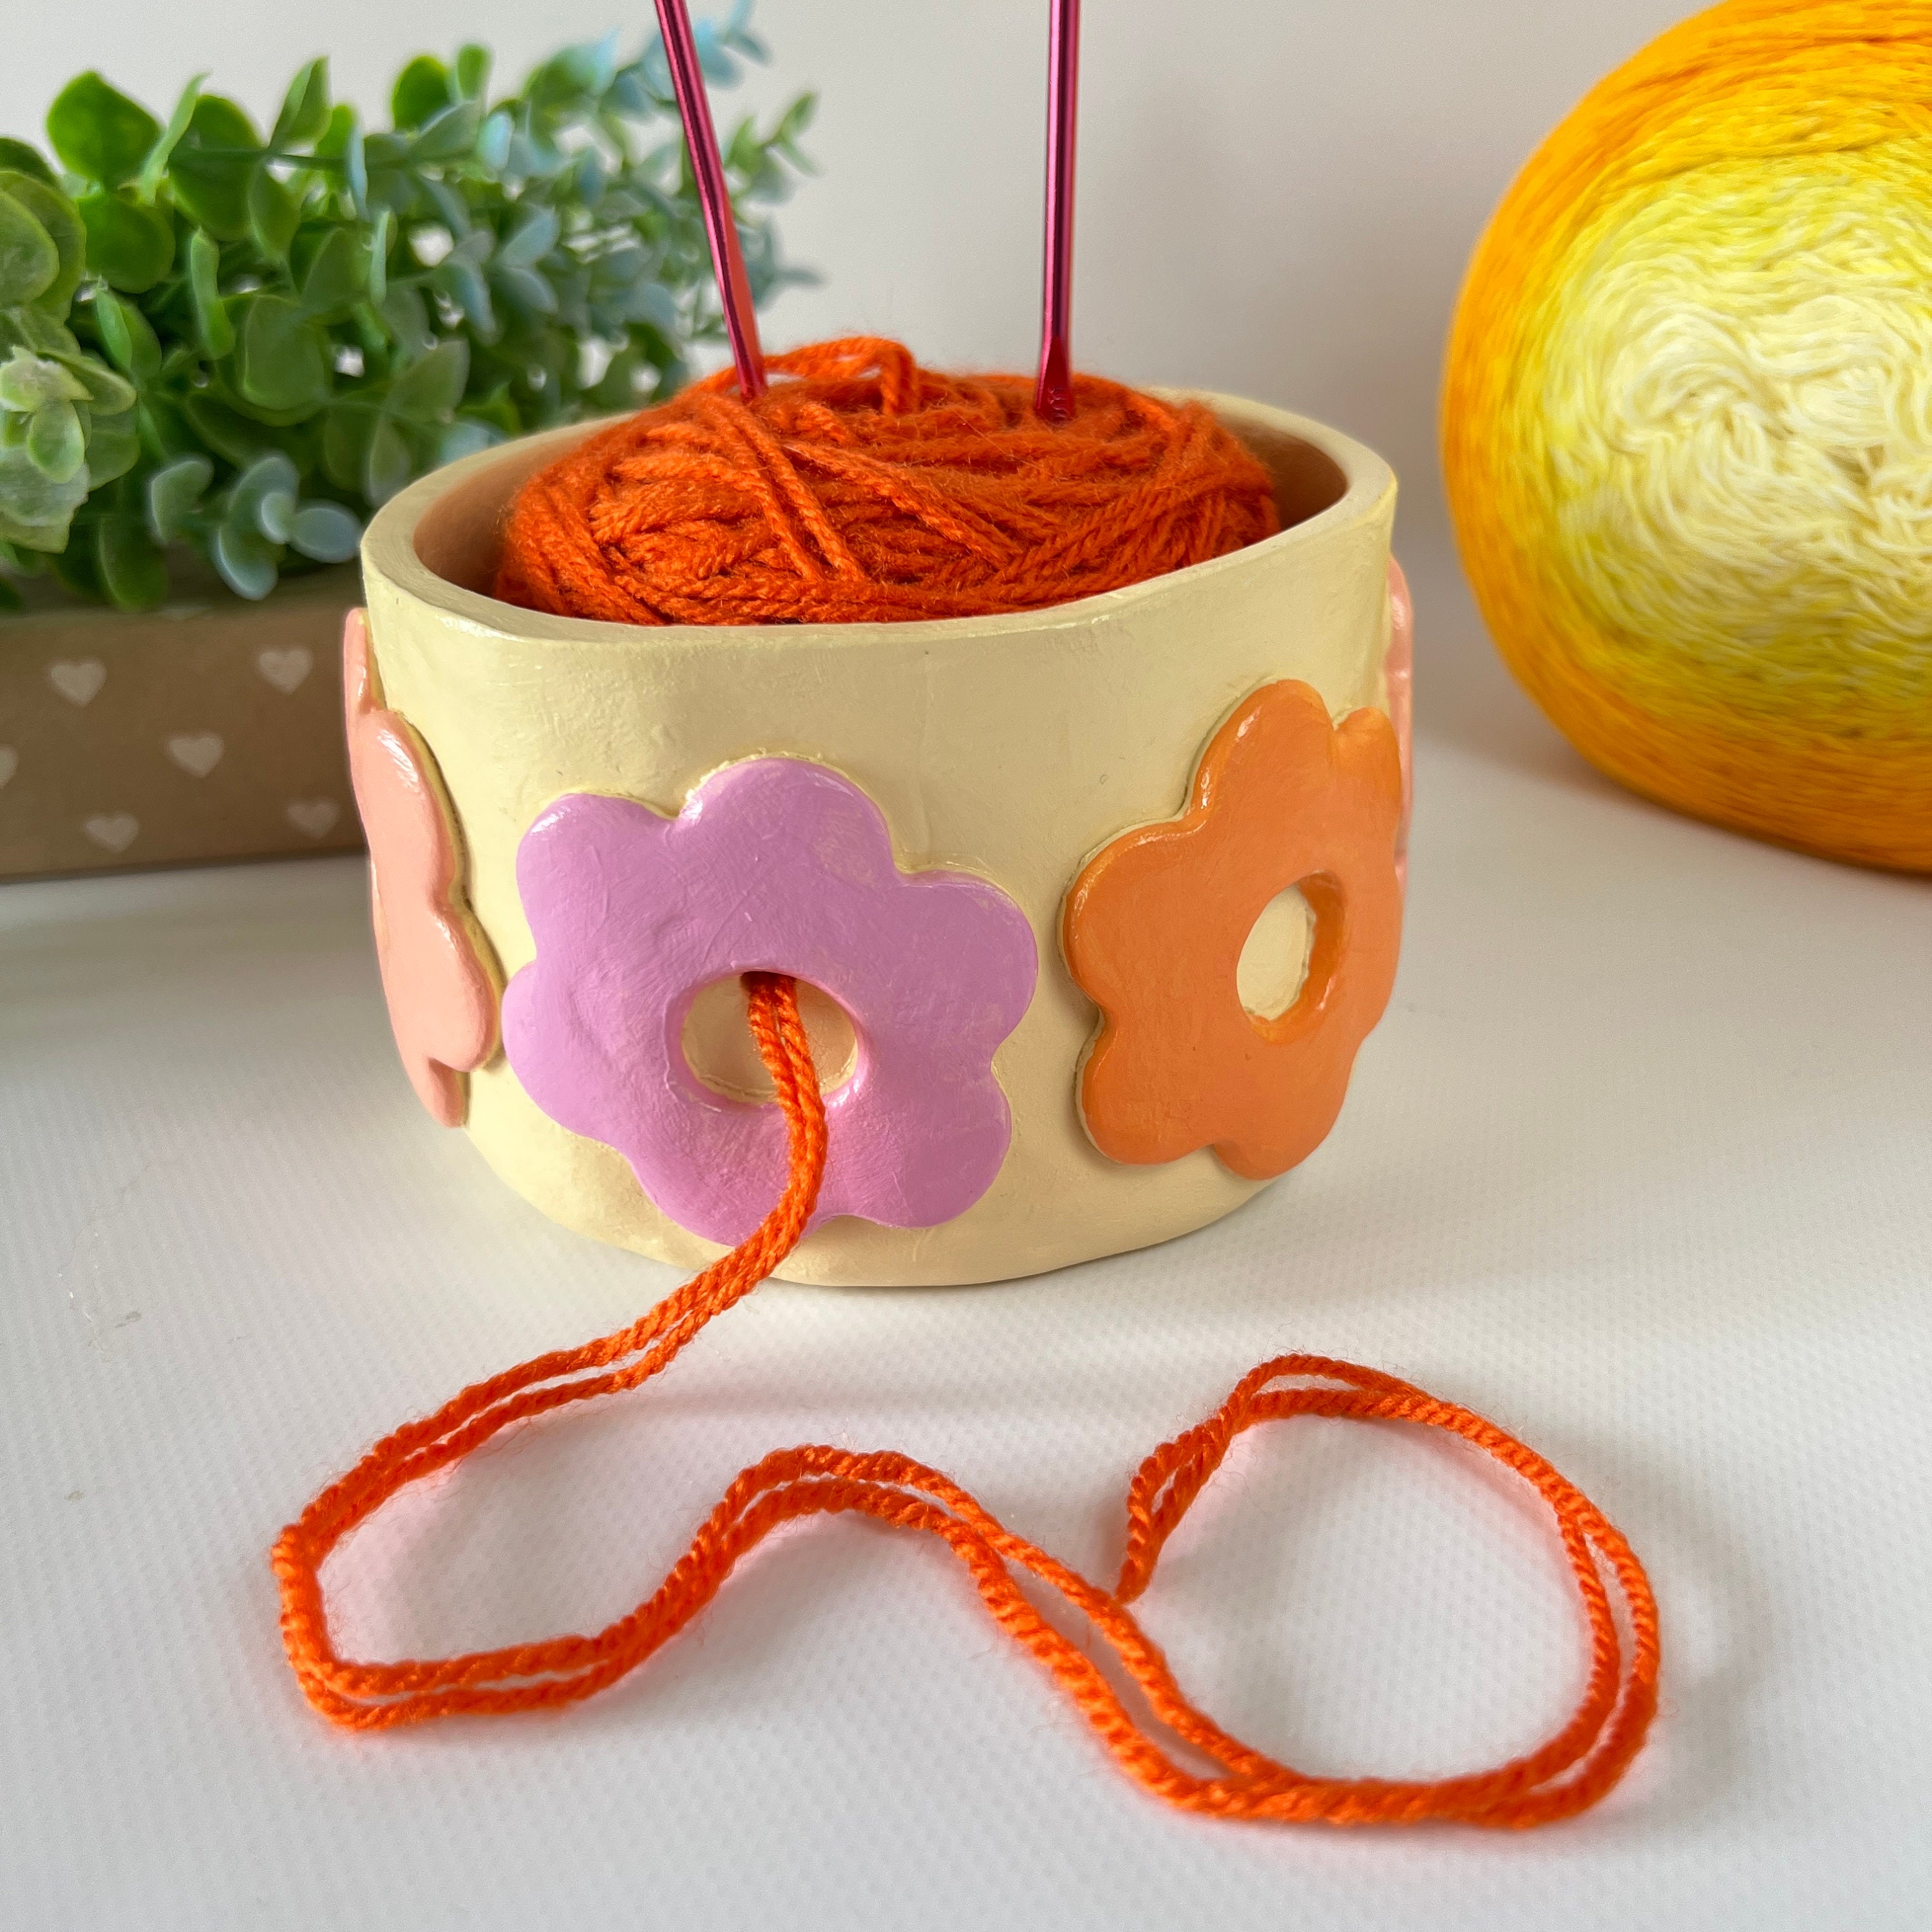 15 Must Have Yarn Bowls  Handmade Crochet Gift Ideas - Stardust